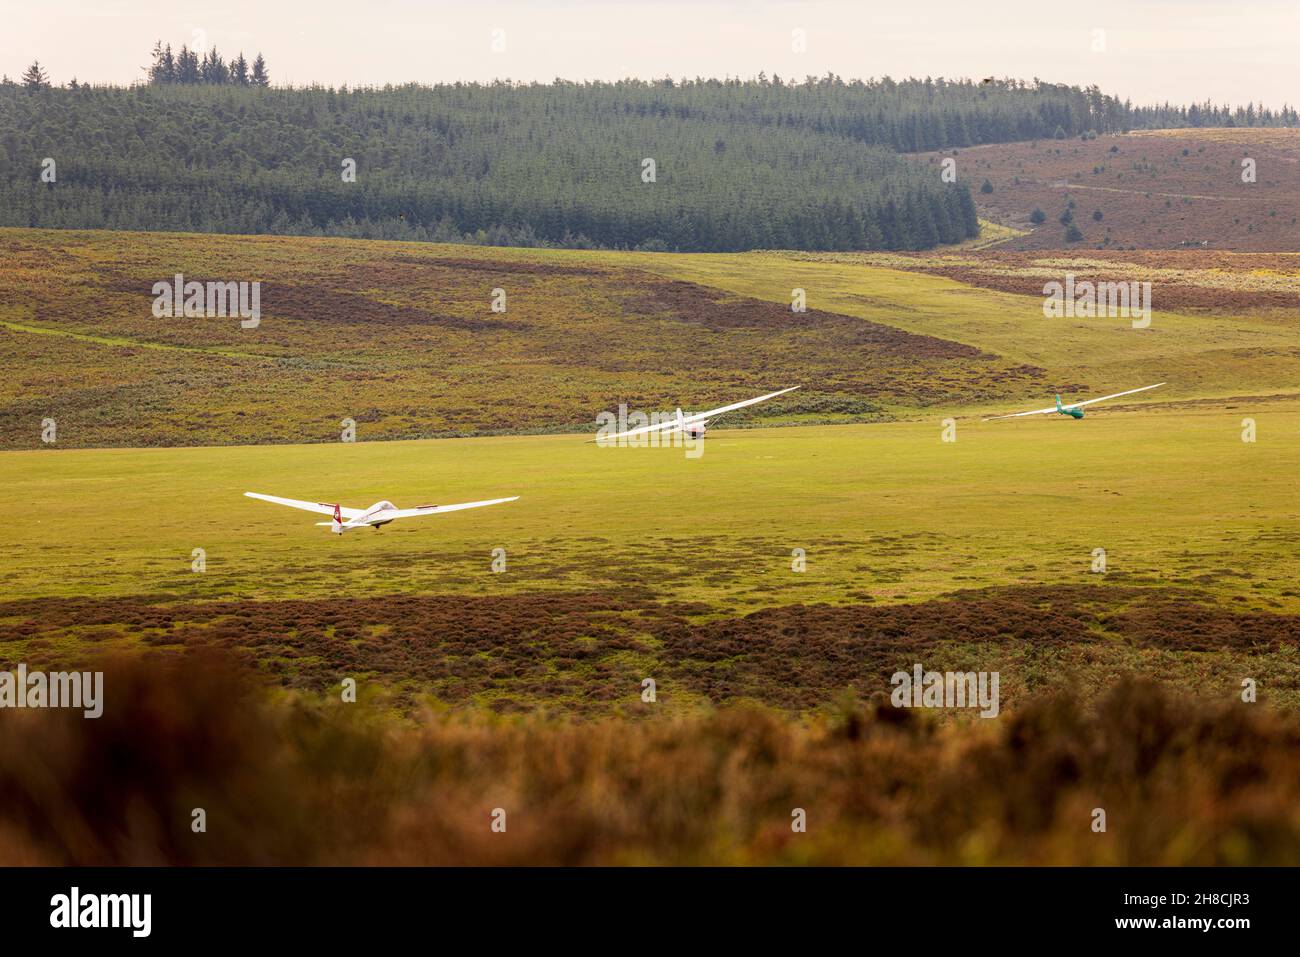 Alianti al Midland Gliding Club on the Heathland, Long Mynd, Shropshire Hills, area di bellezza naturale, Inghilterra Foto Stock